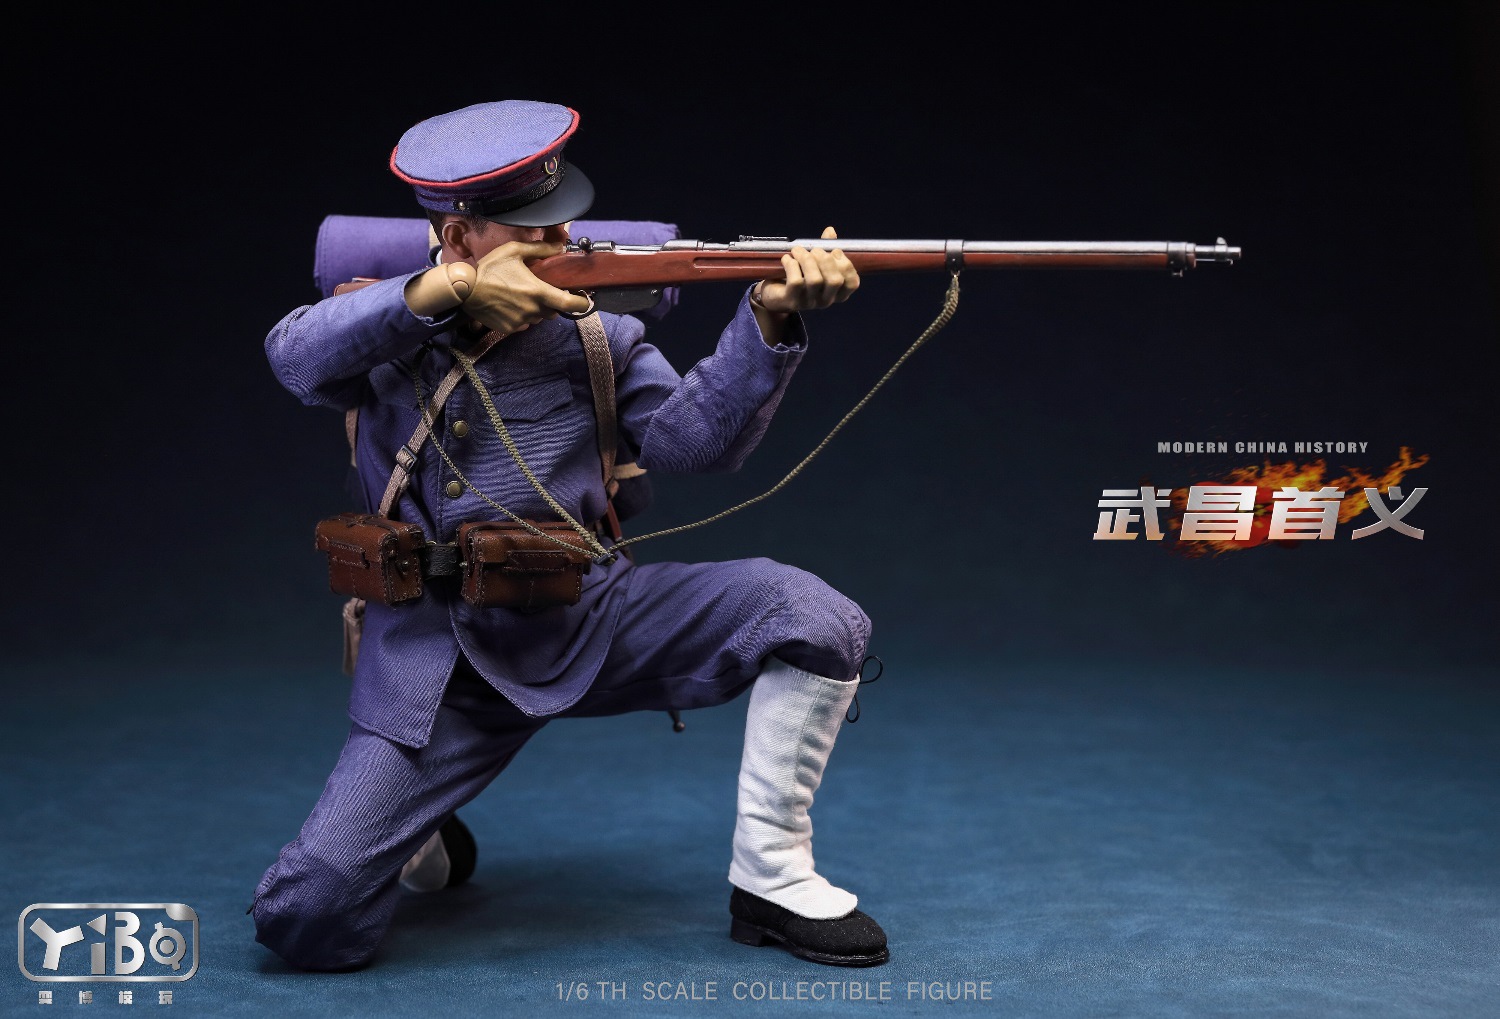 Soldier - NEW PRODUCT: Yibo model - Wuchang Shouyi #YIBO 004 0487